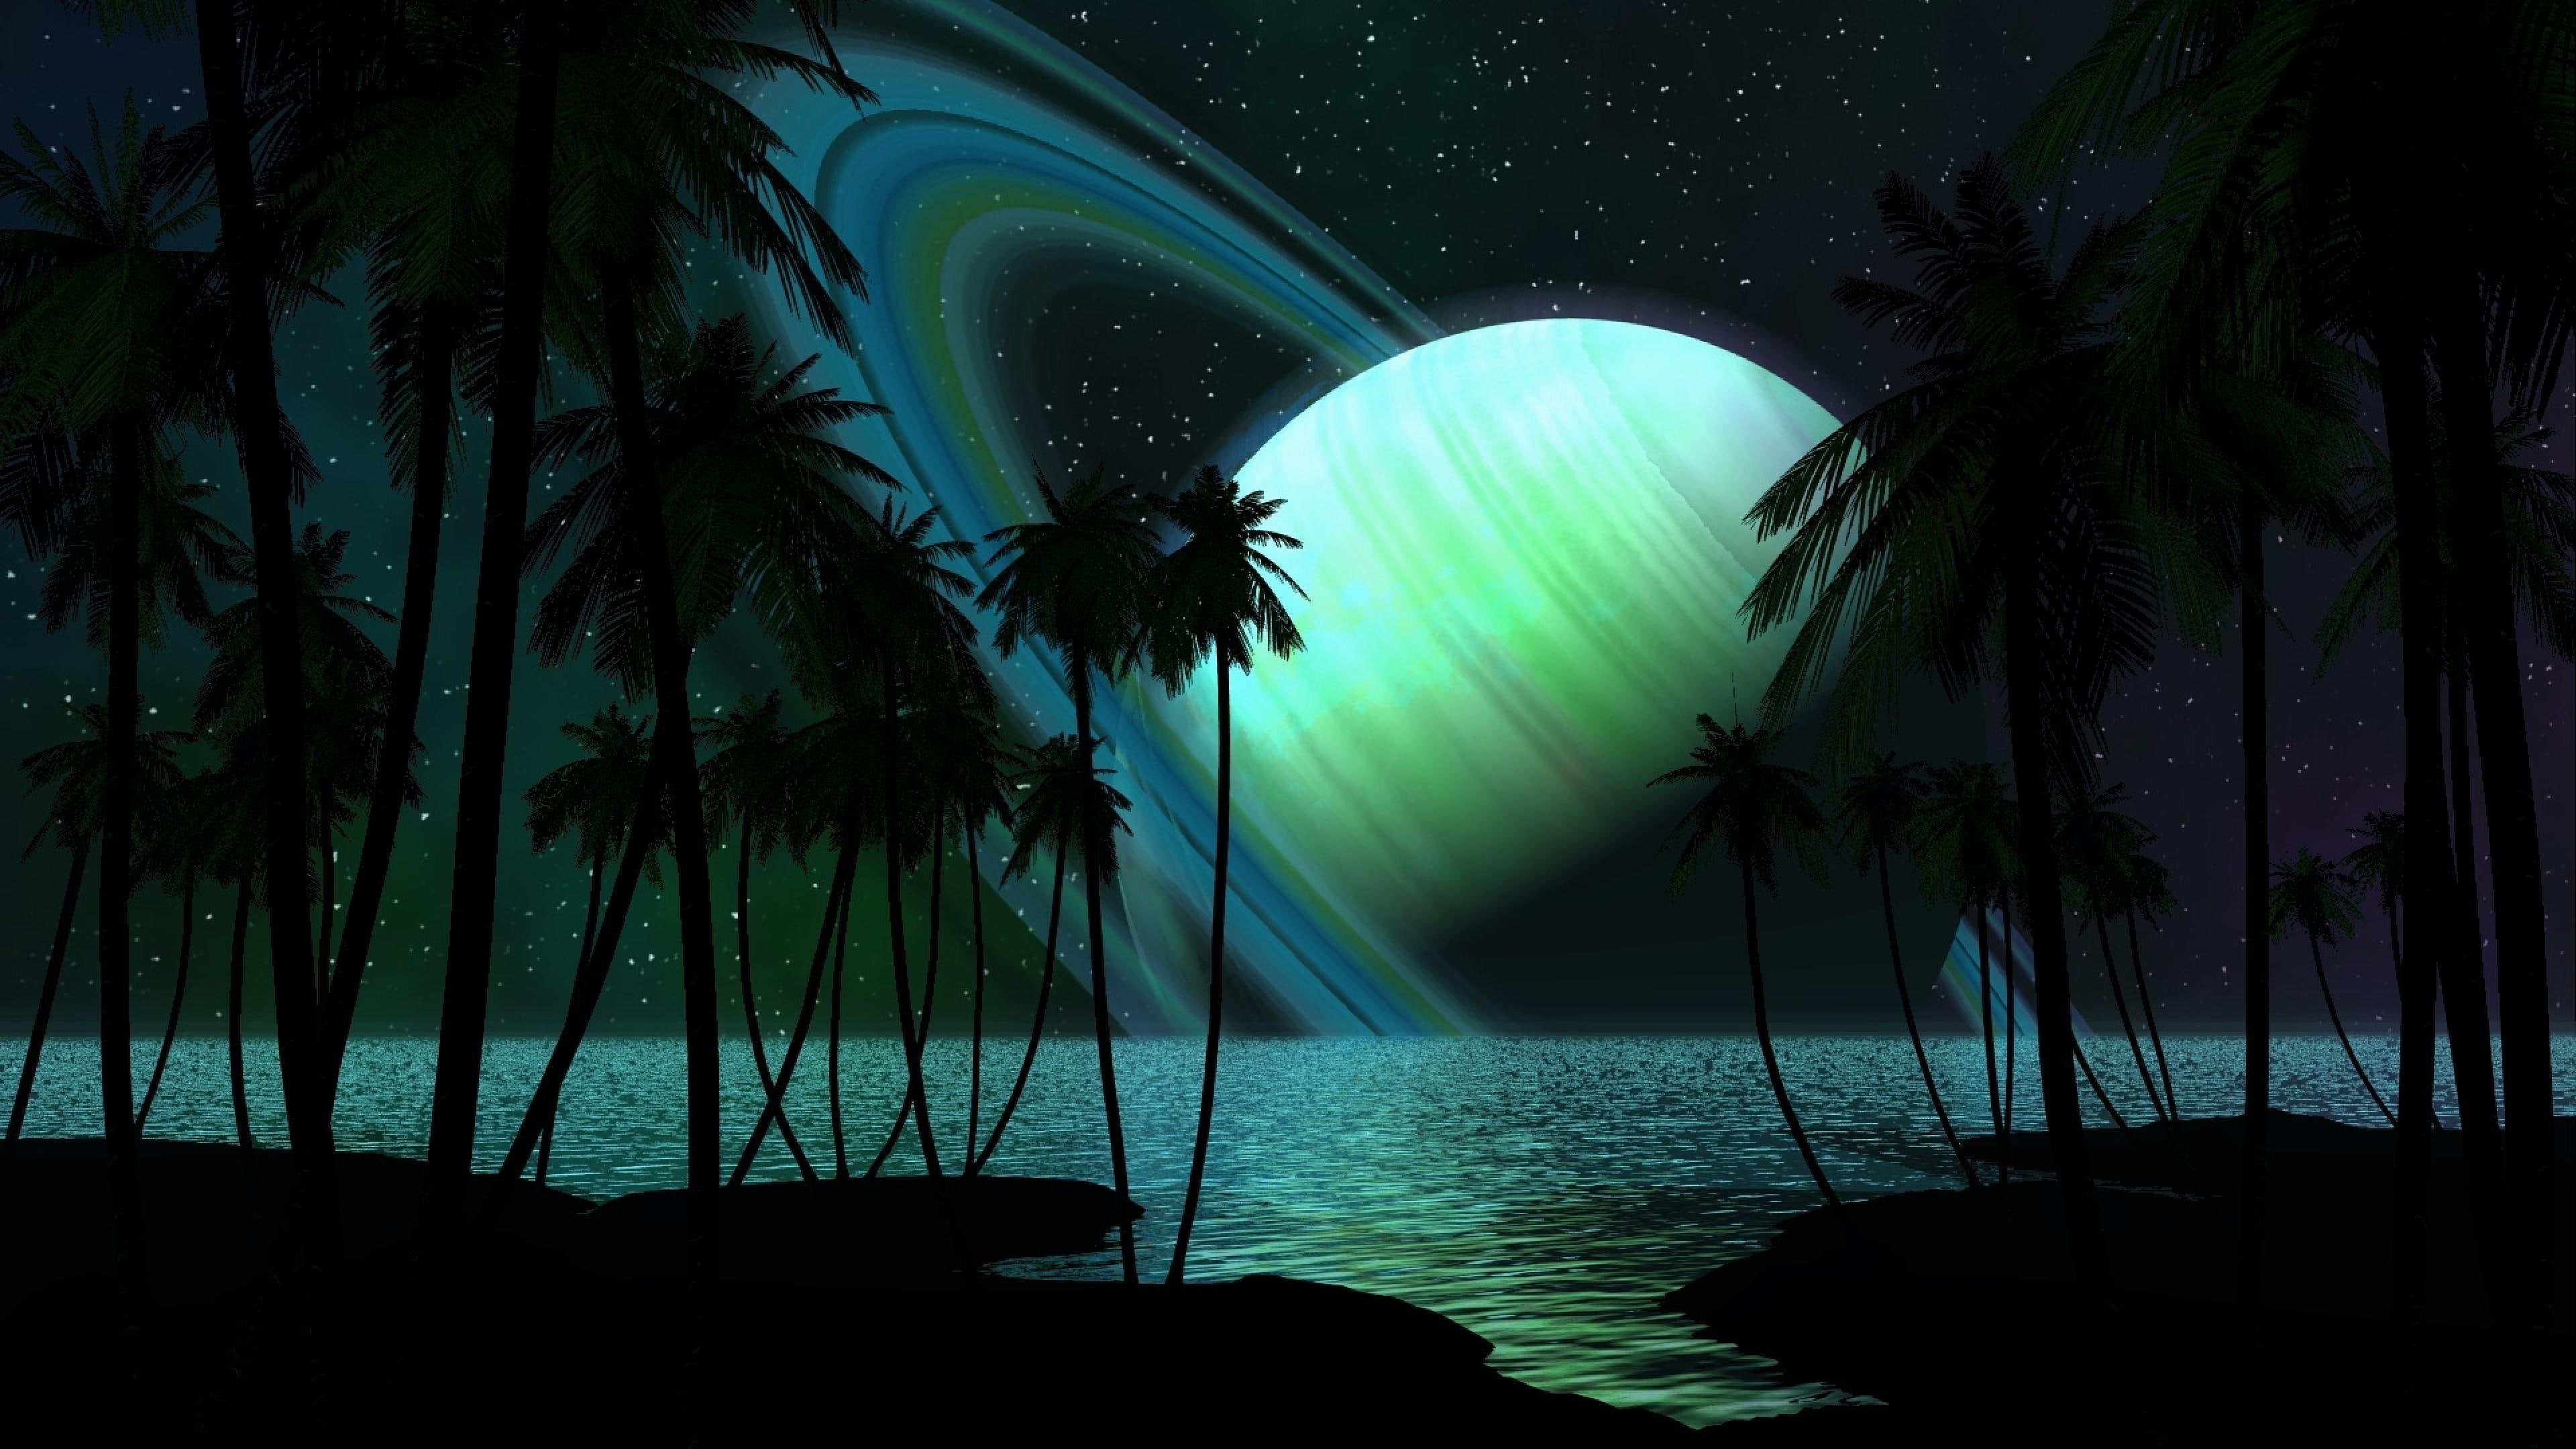 planet, space art, night sky, palms, coast, palm tree, cool